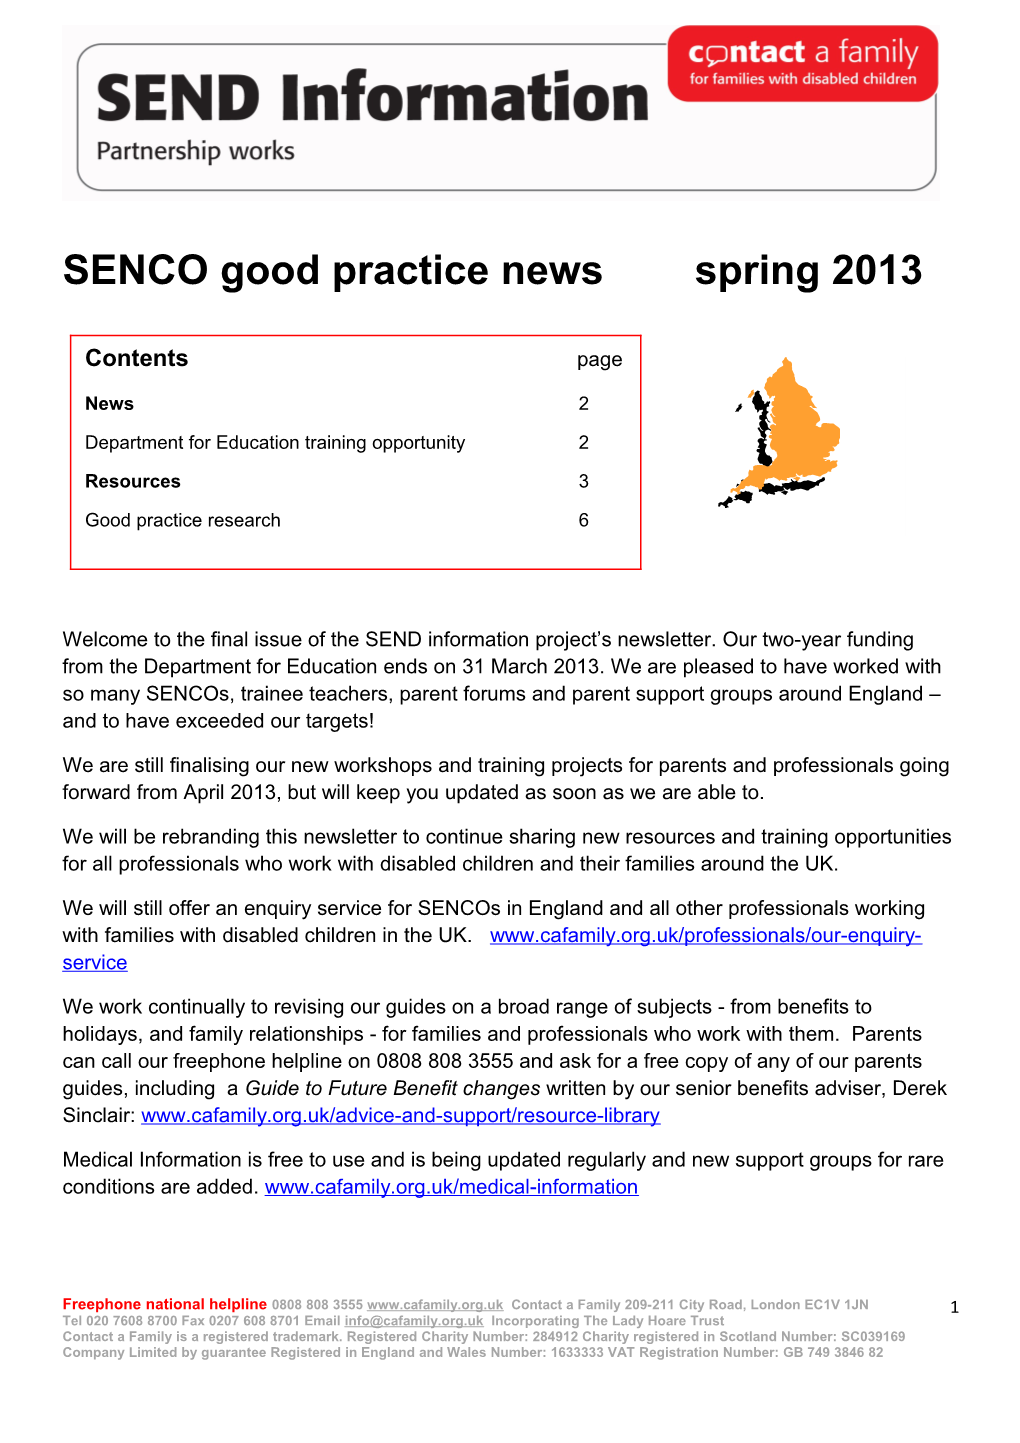 SENCO Good Practice News Spring 2013